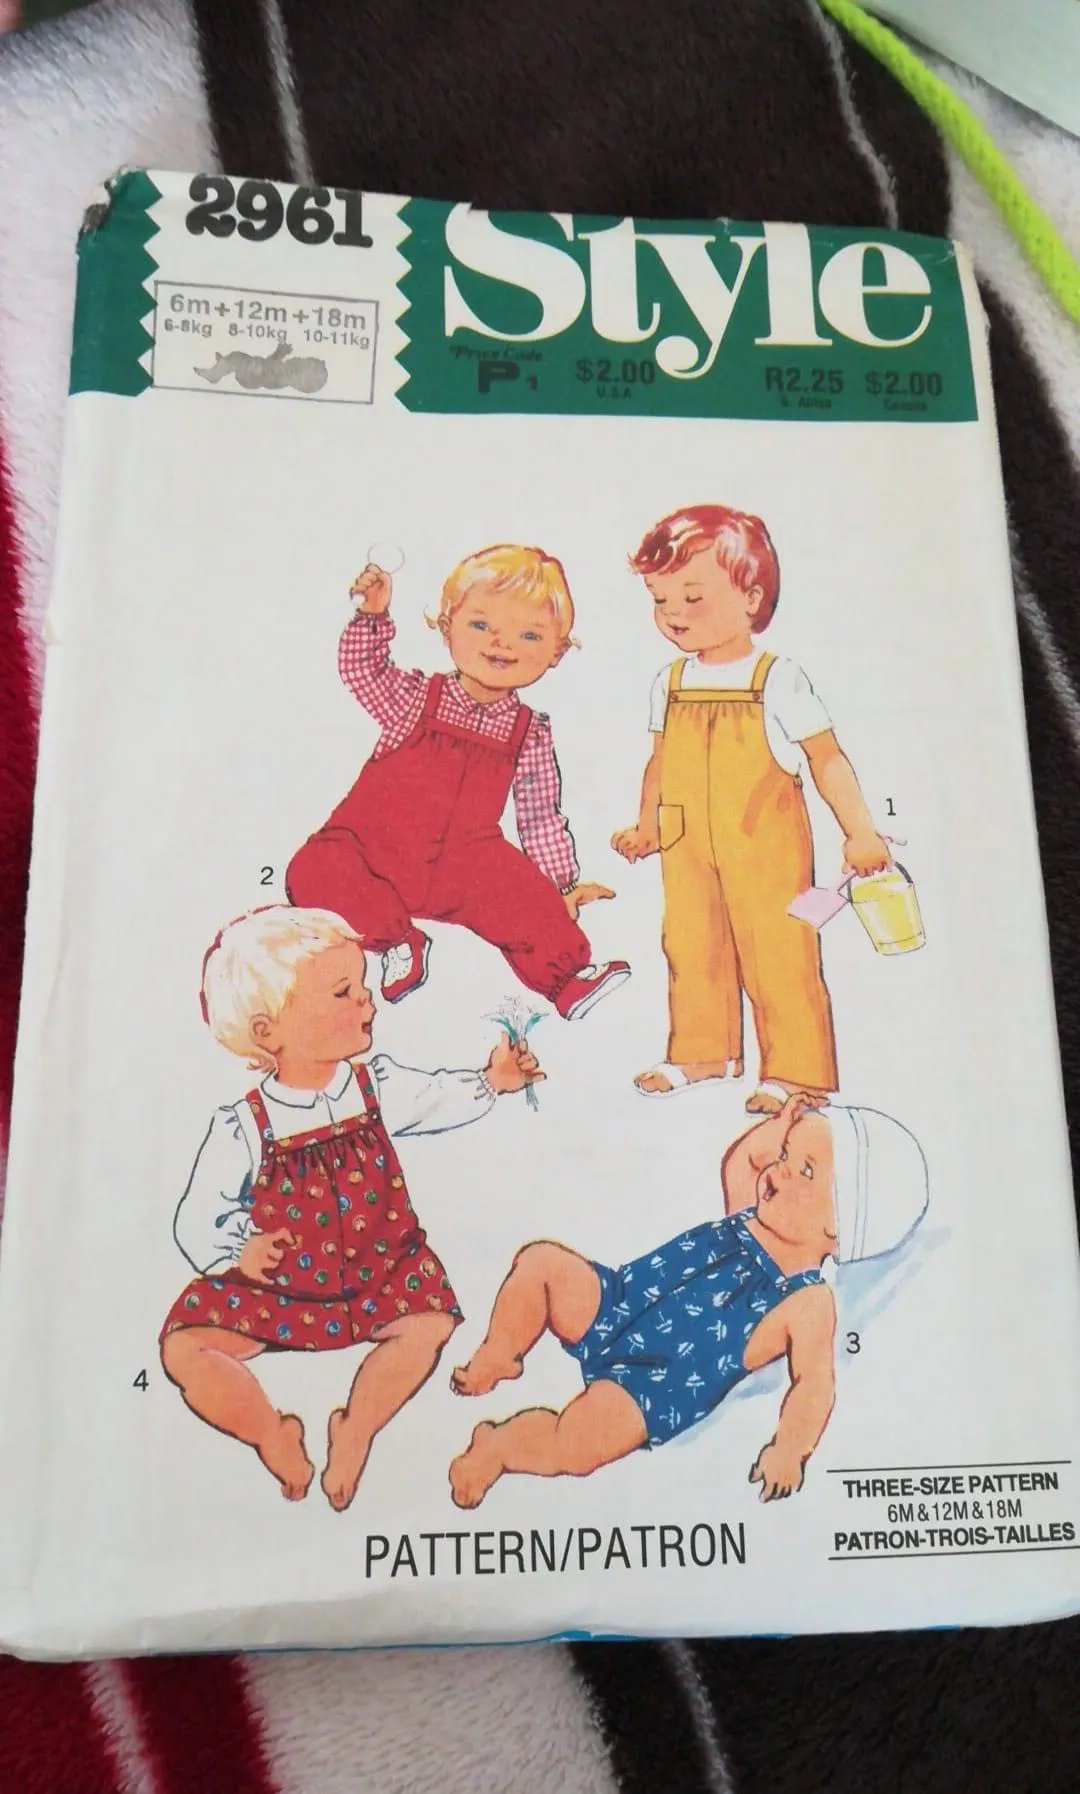 1980s kids' patterns